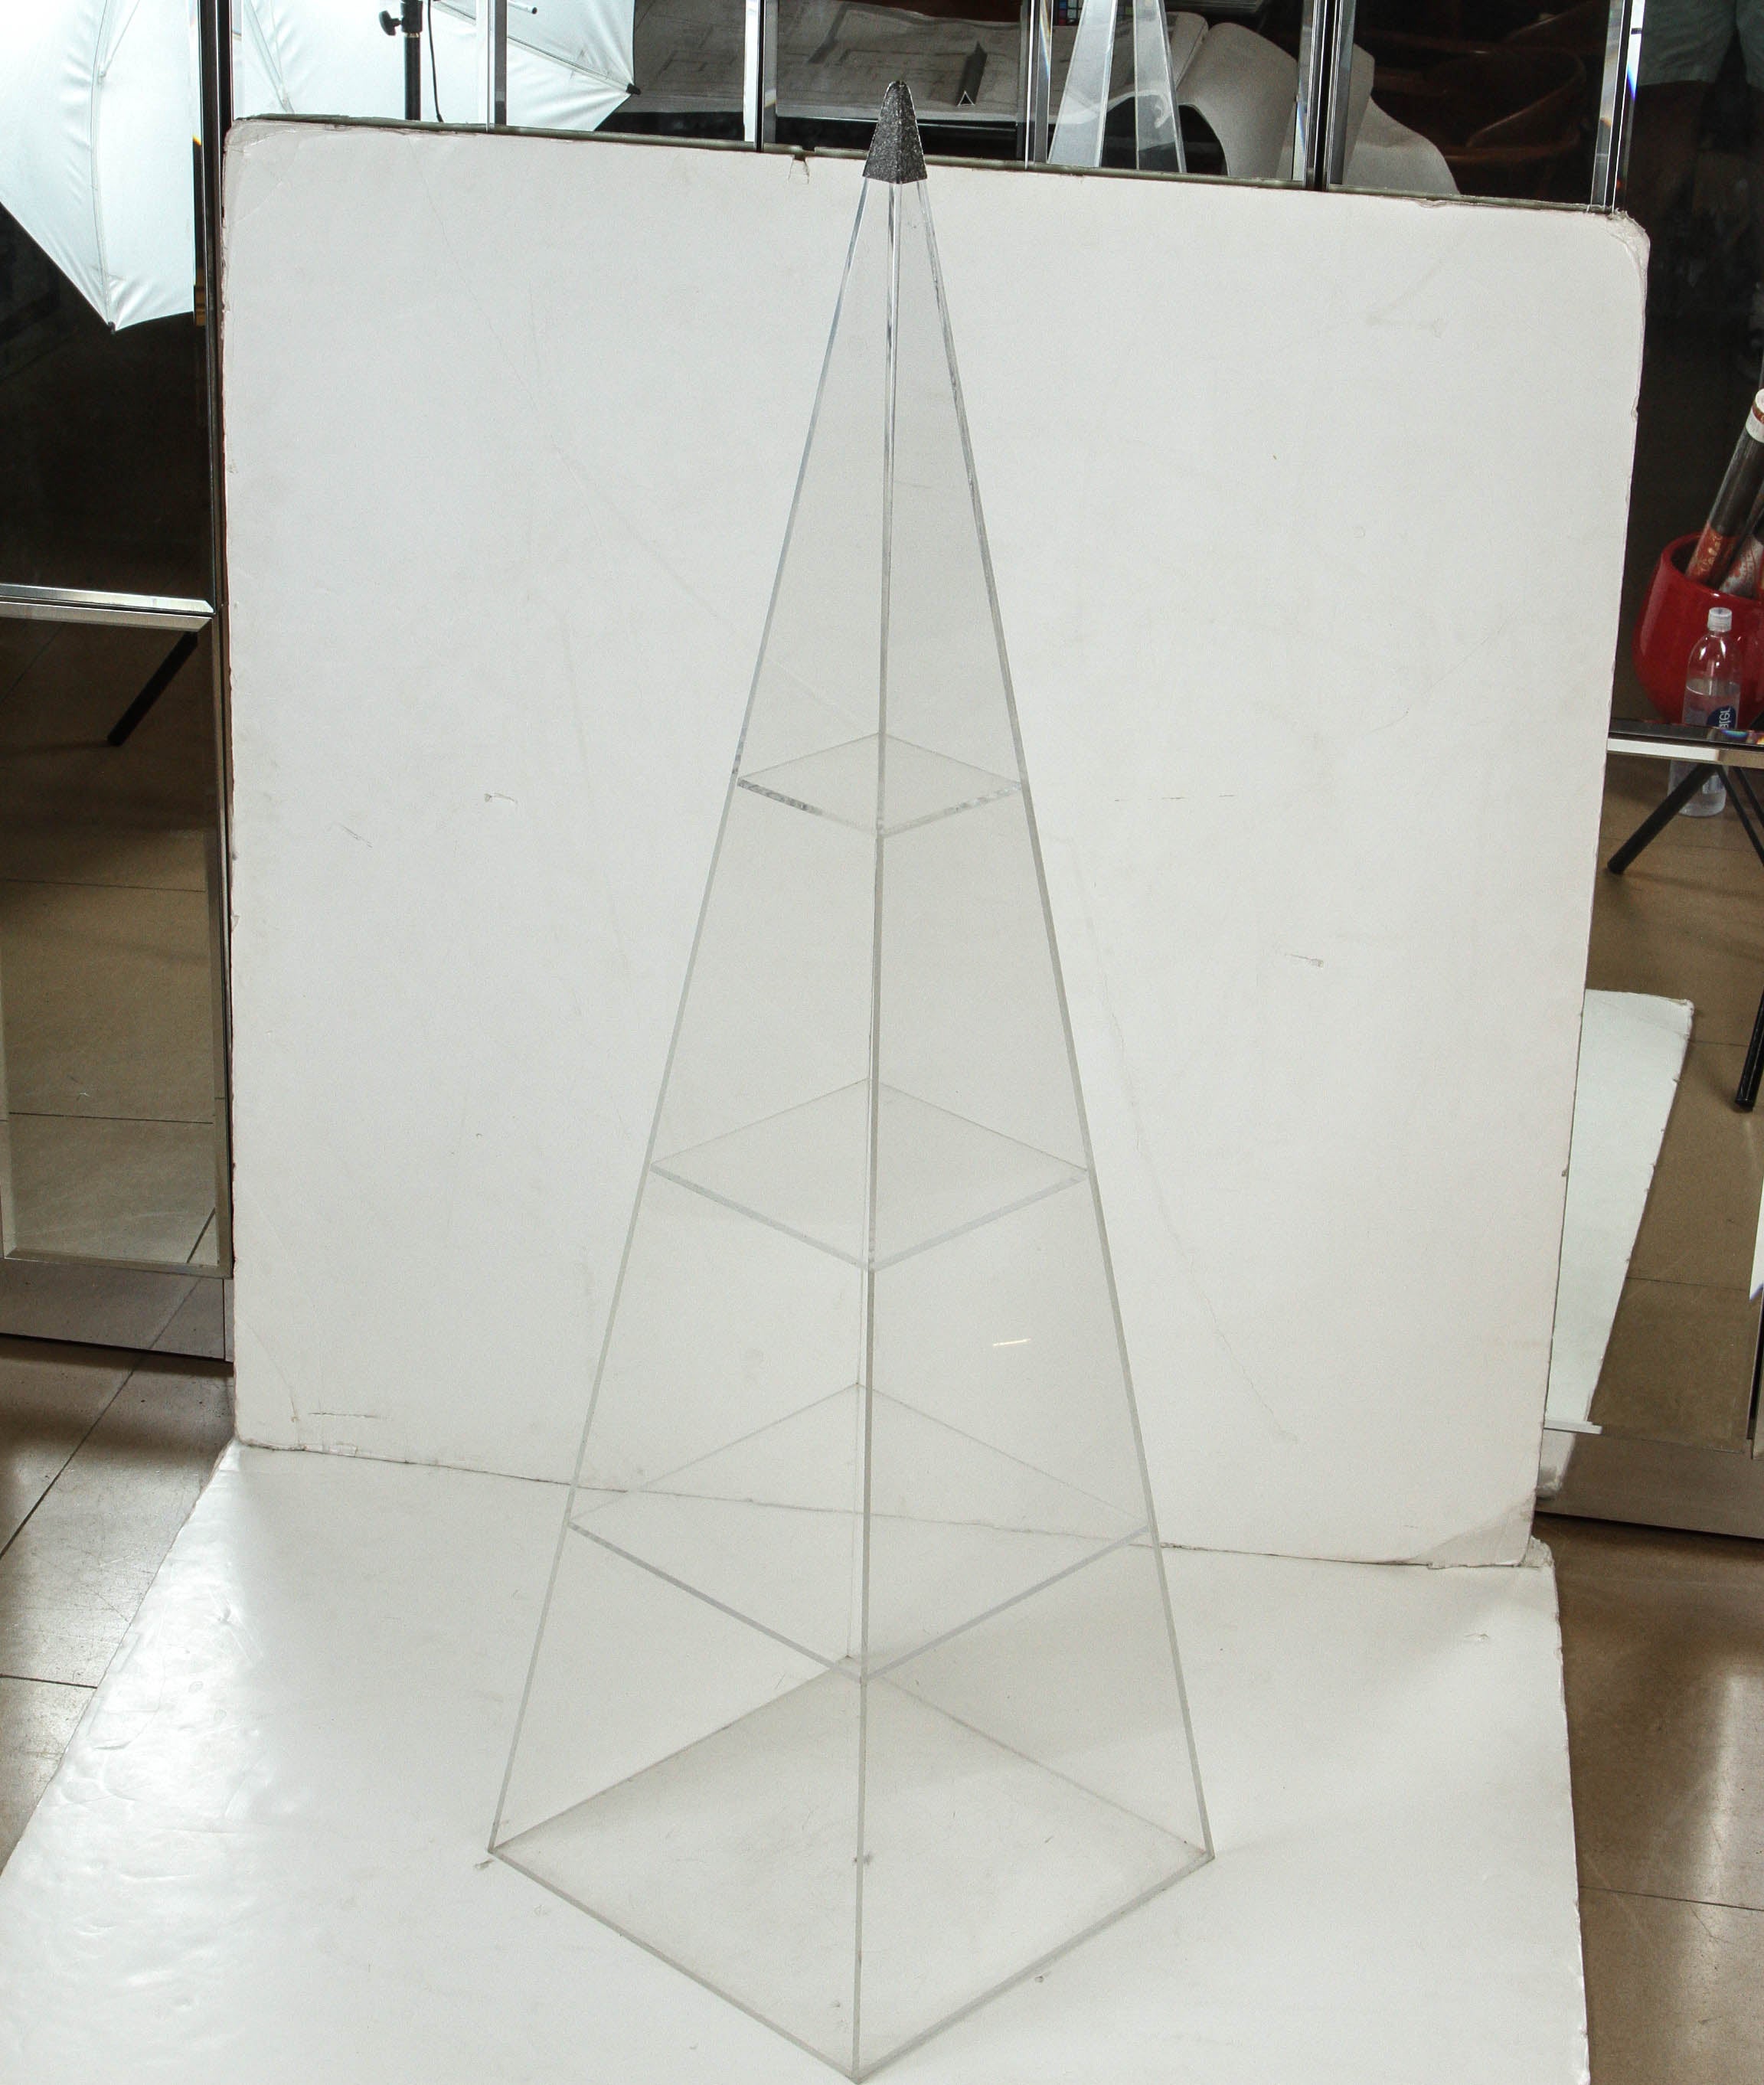 Lucite Pyramid Display